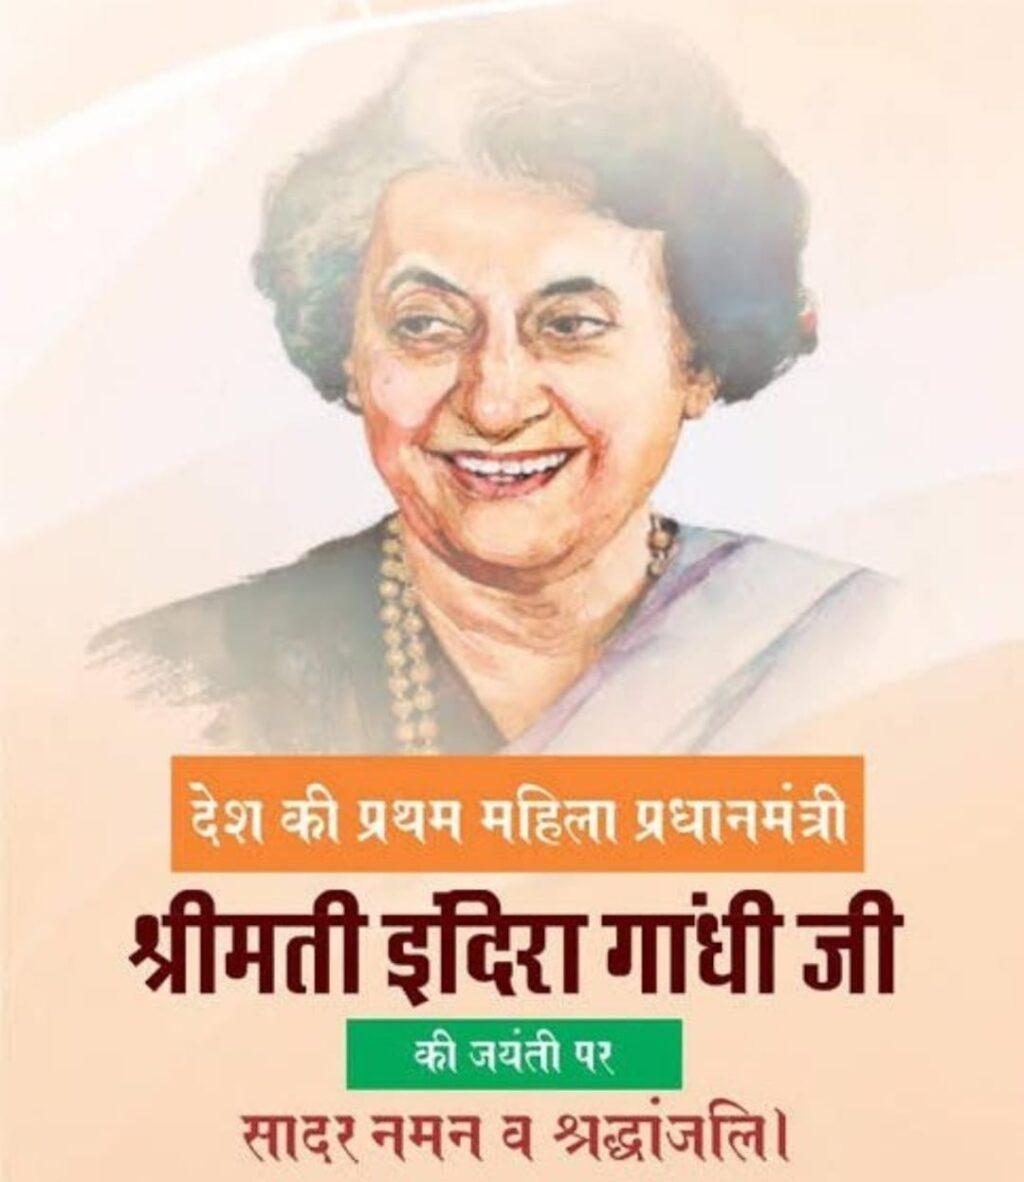 बाँदा19नवम्बर*भारत की आयरन लेडी, प्रथम महिला प्रधानमंत्री श्रीमती इंदिरा गांधी जी की जयंती मनाई गई,